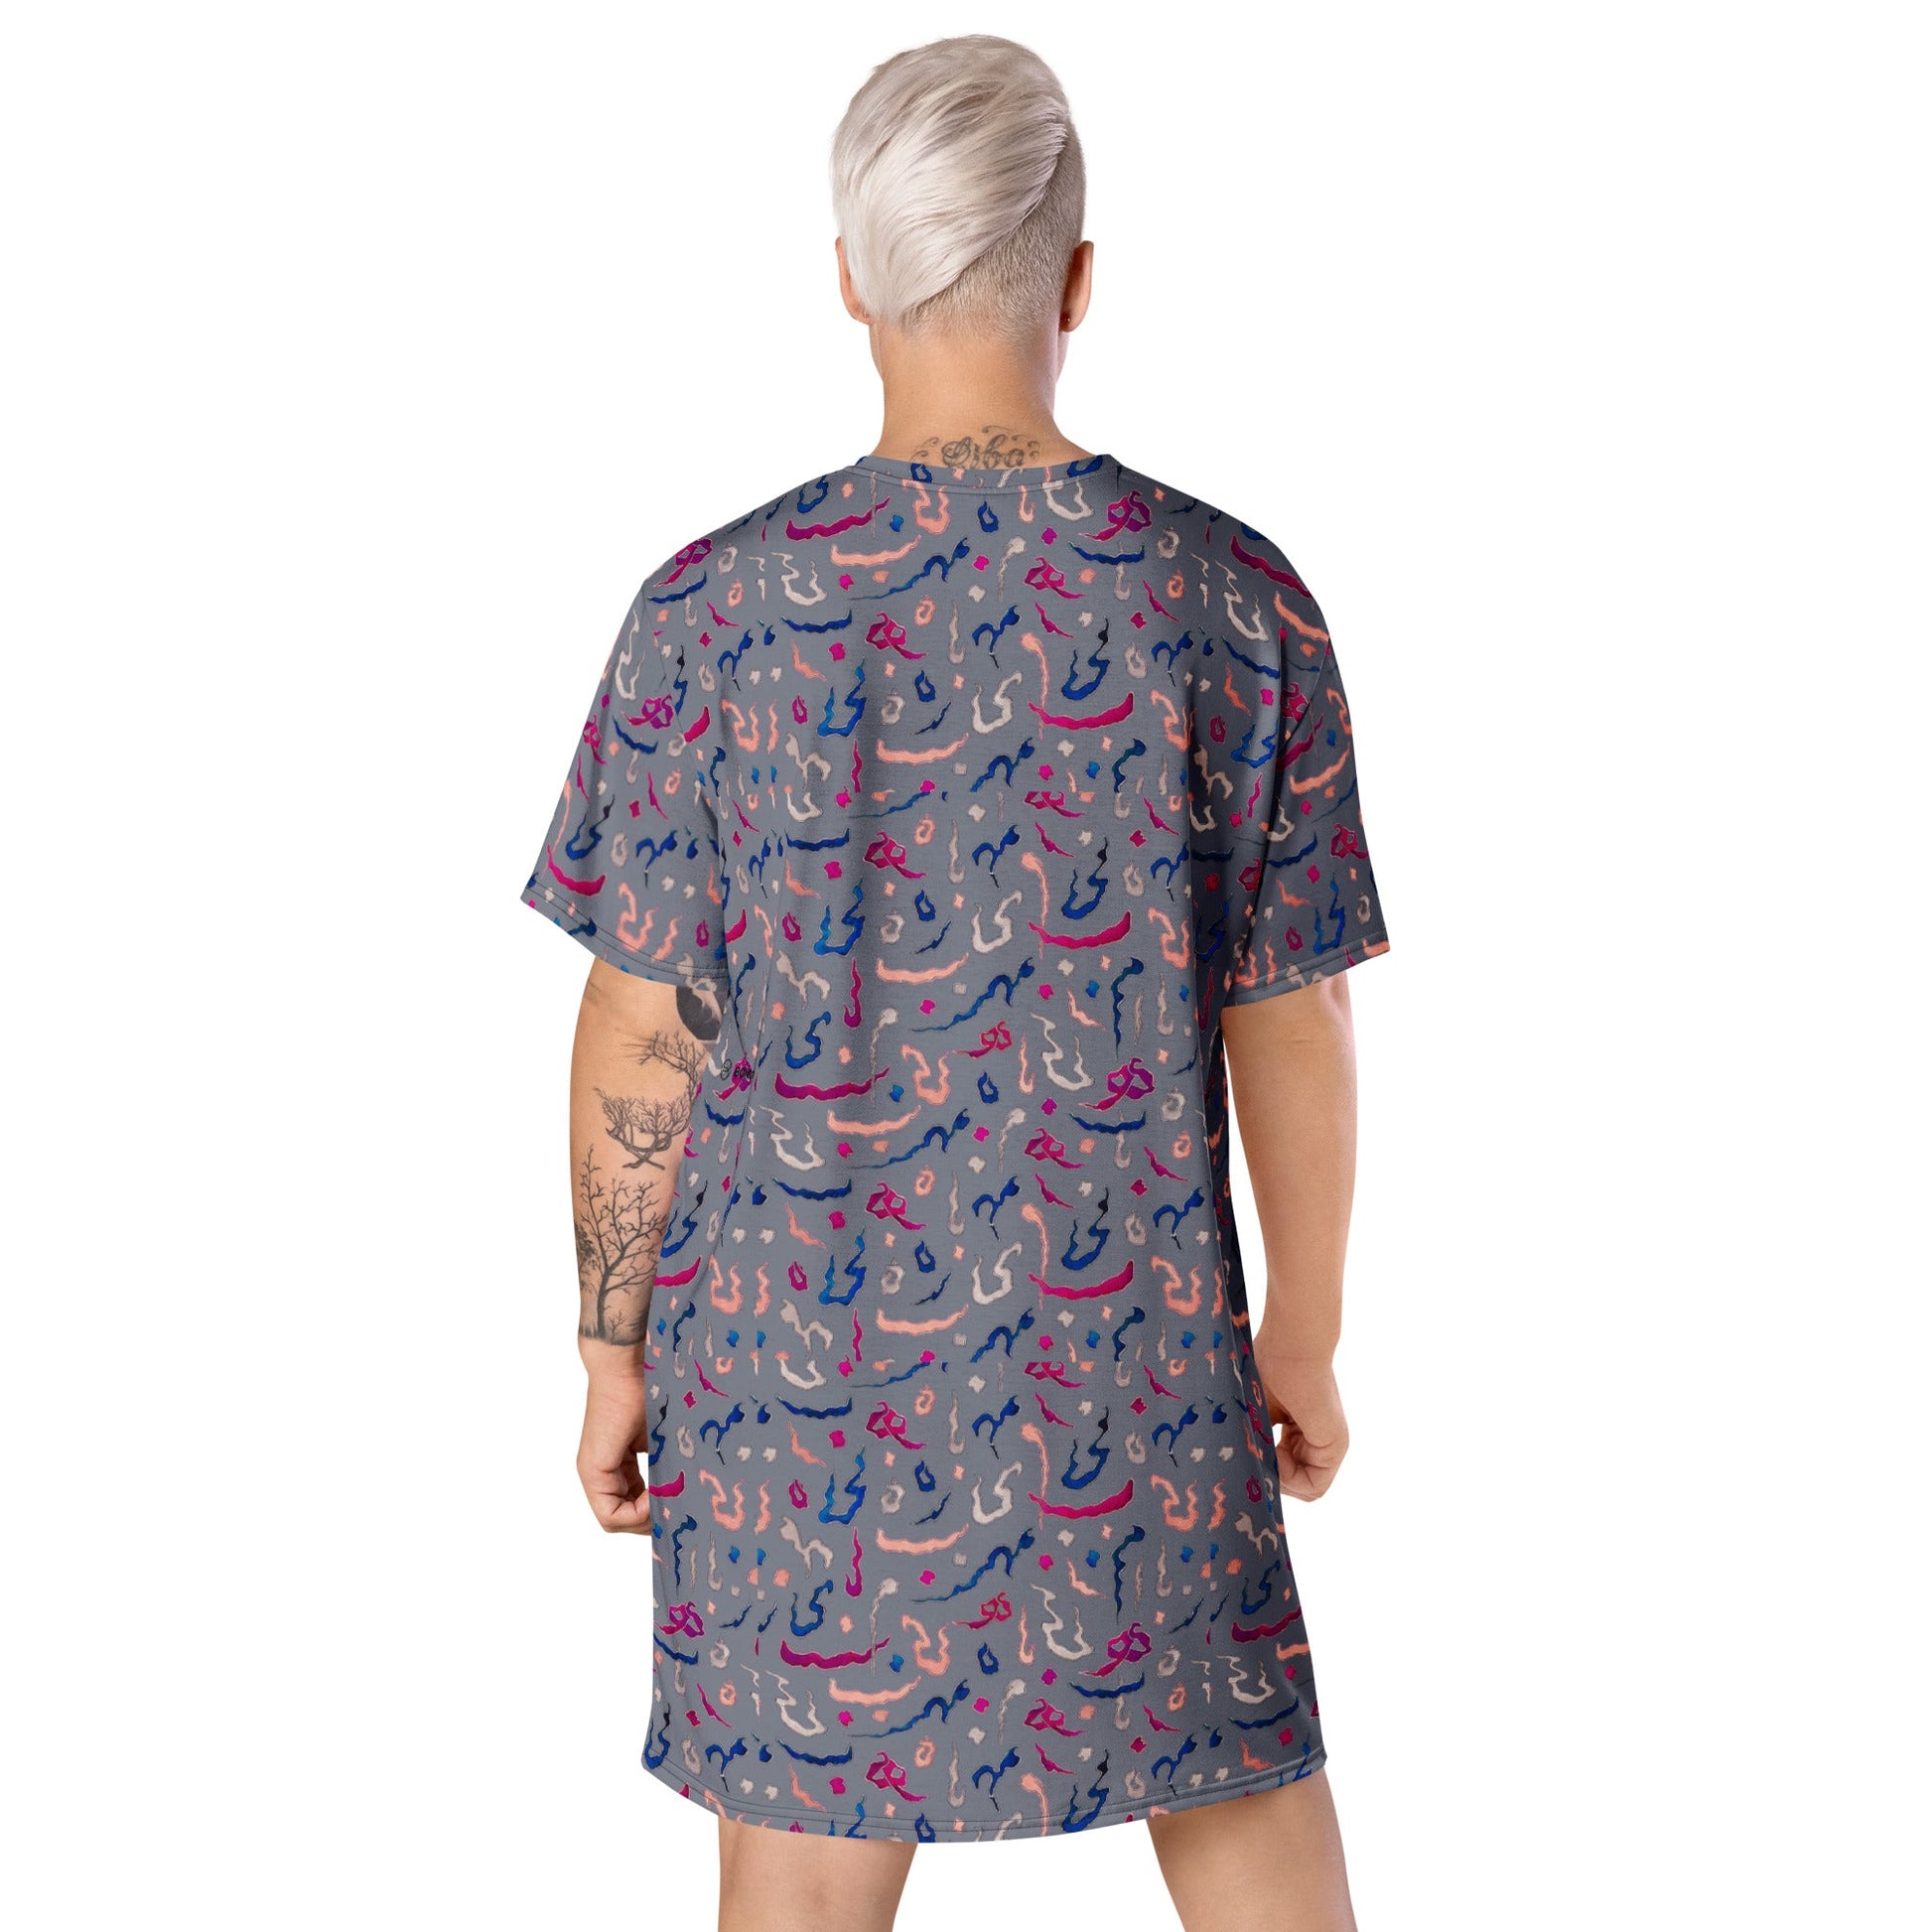 KINDNESS Women's T-Shirt Dress - Bonotee